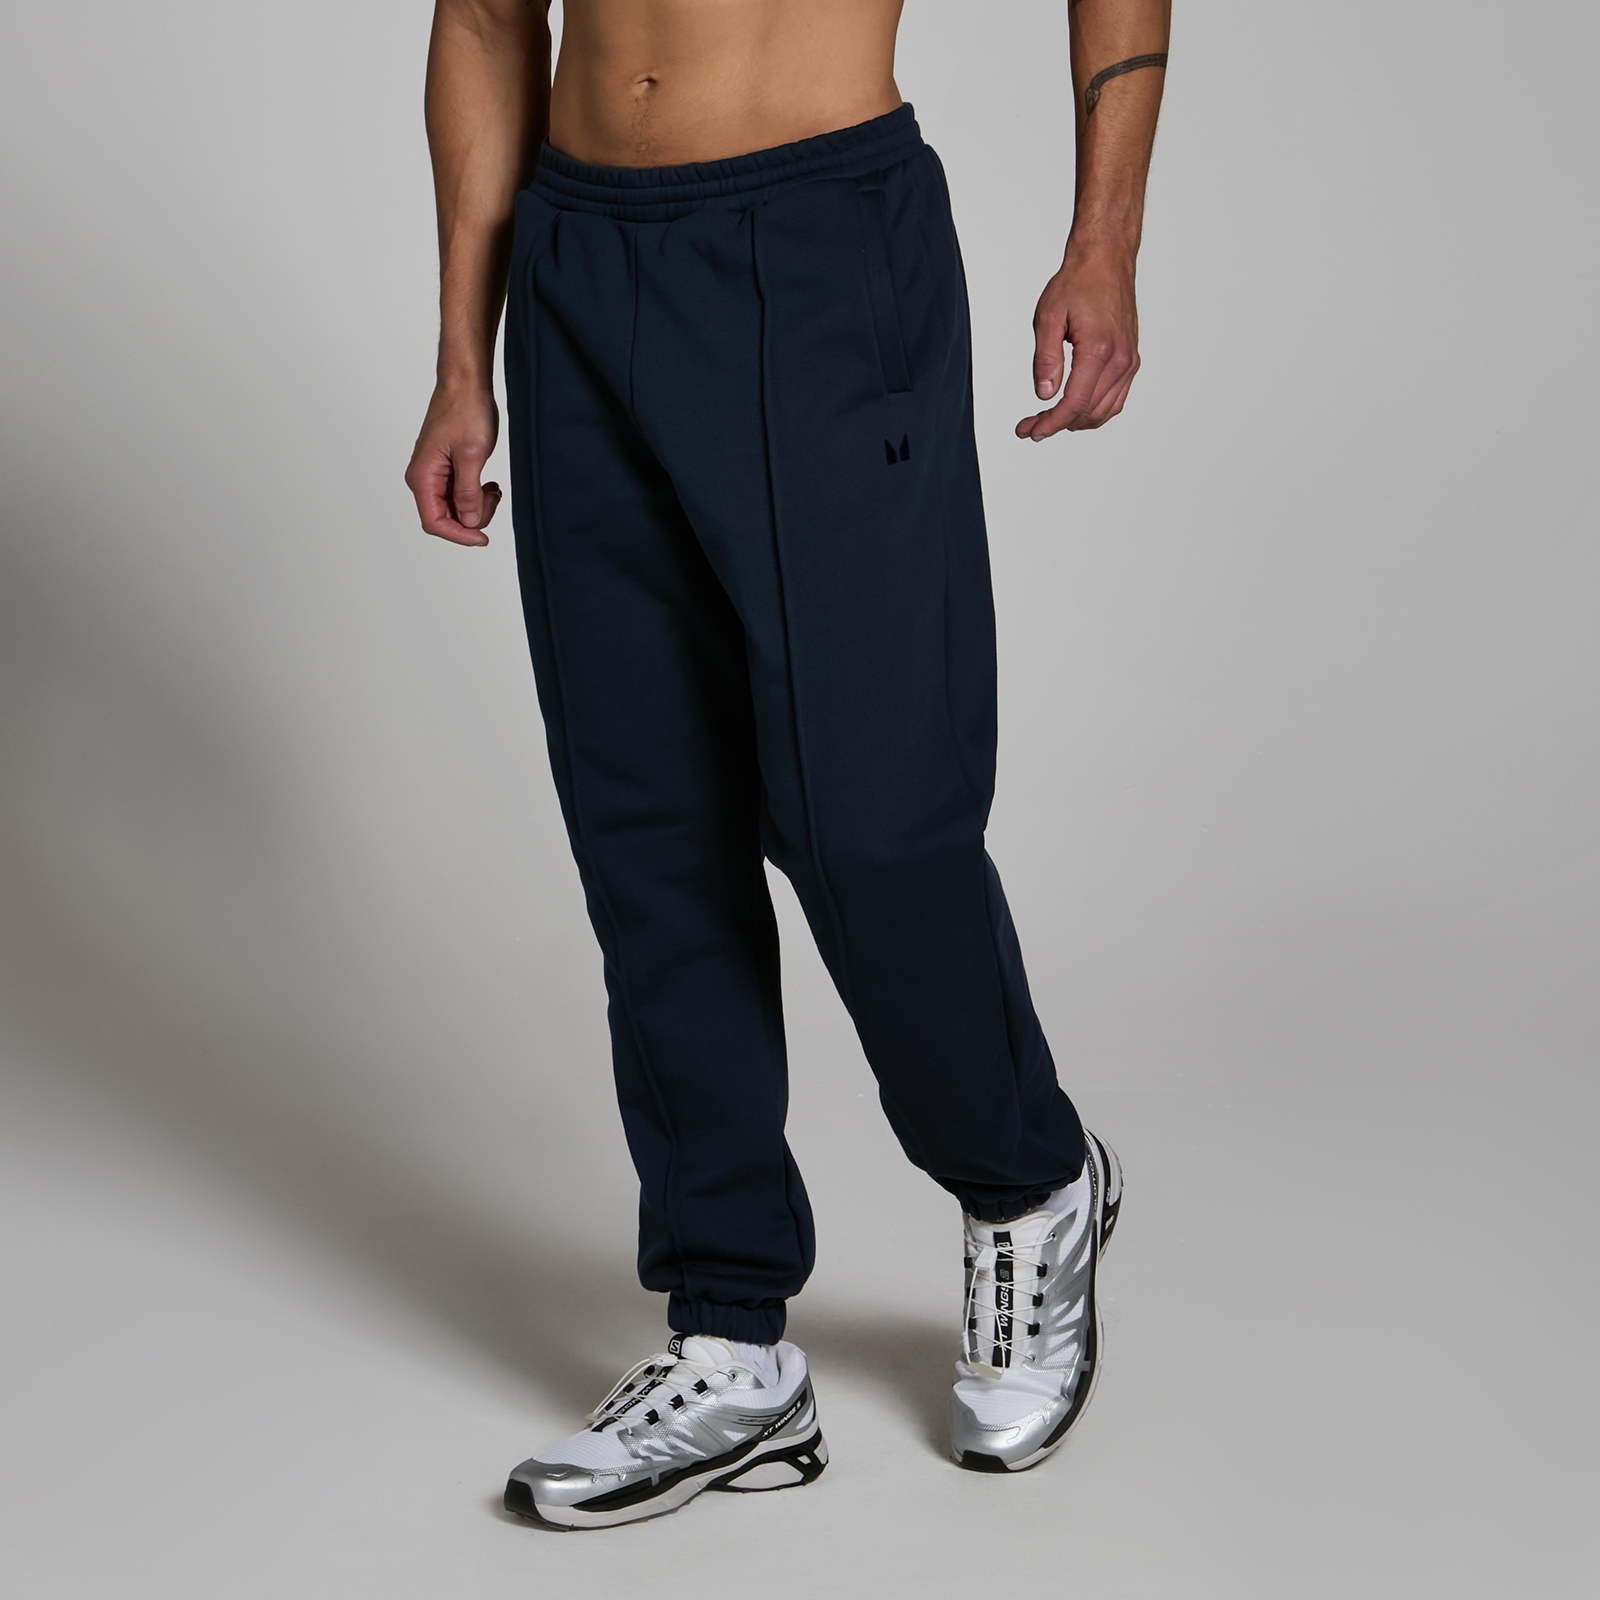 Image of Pantaloni da jogging pesanti oversize MP Lifestyle da uomo - Blu navy scuro - S